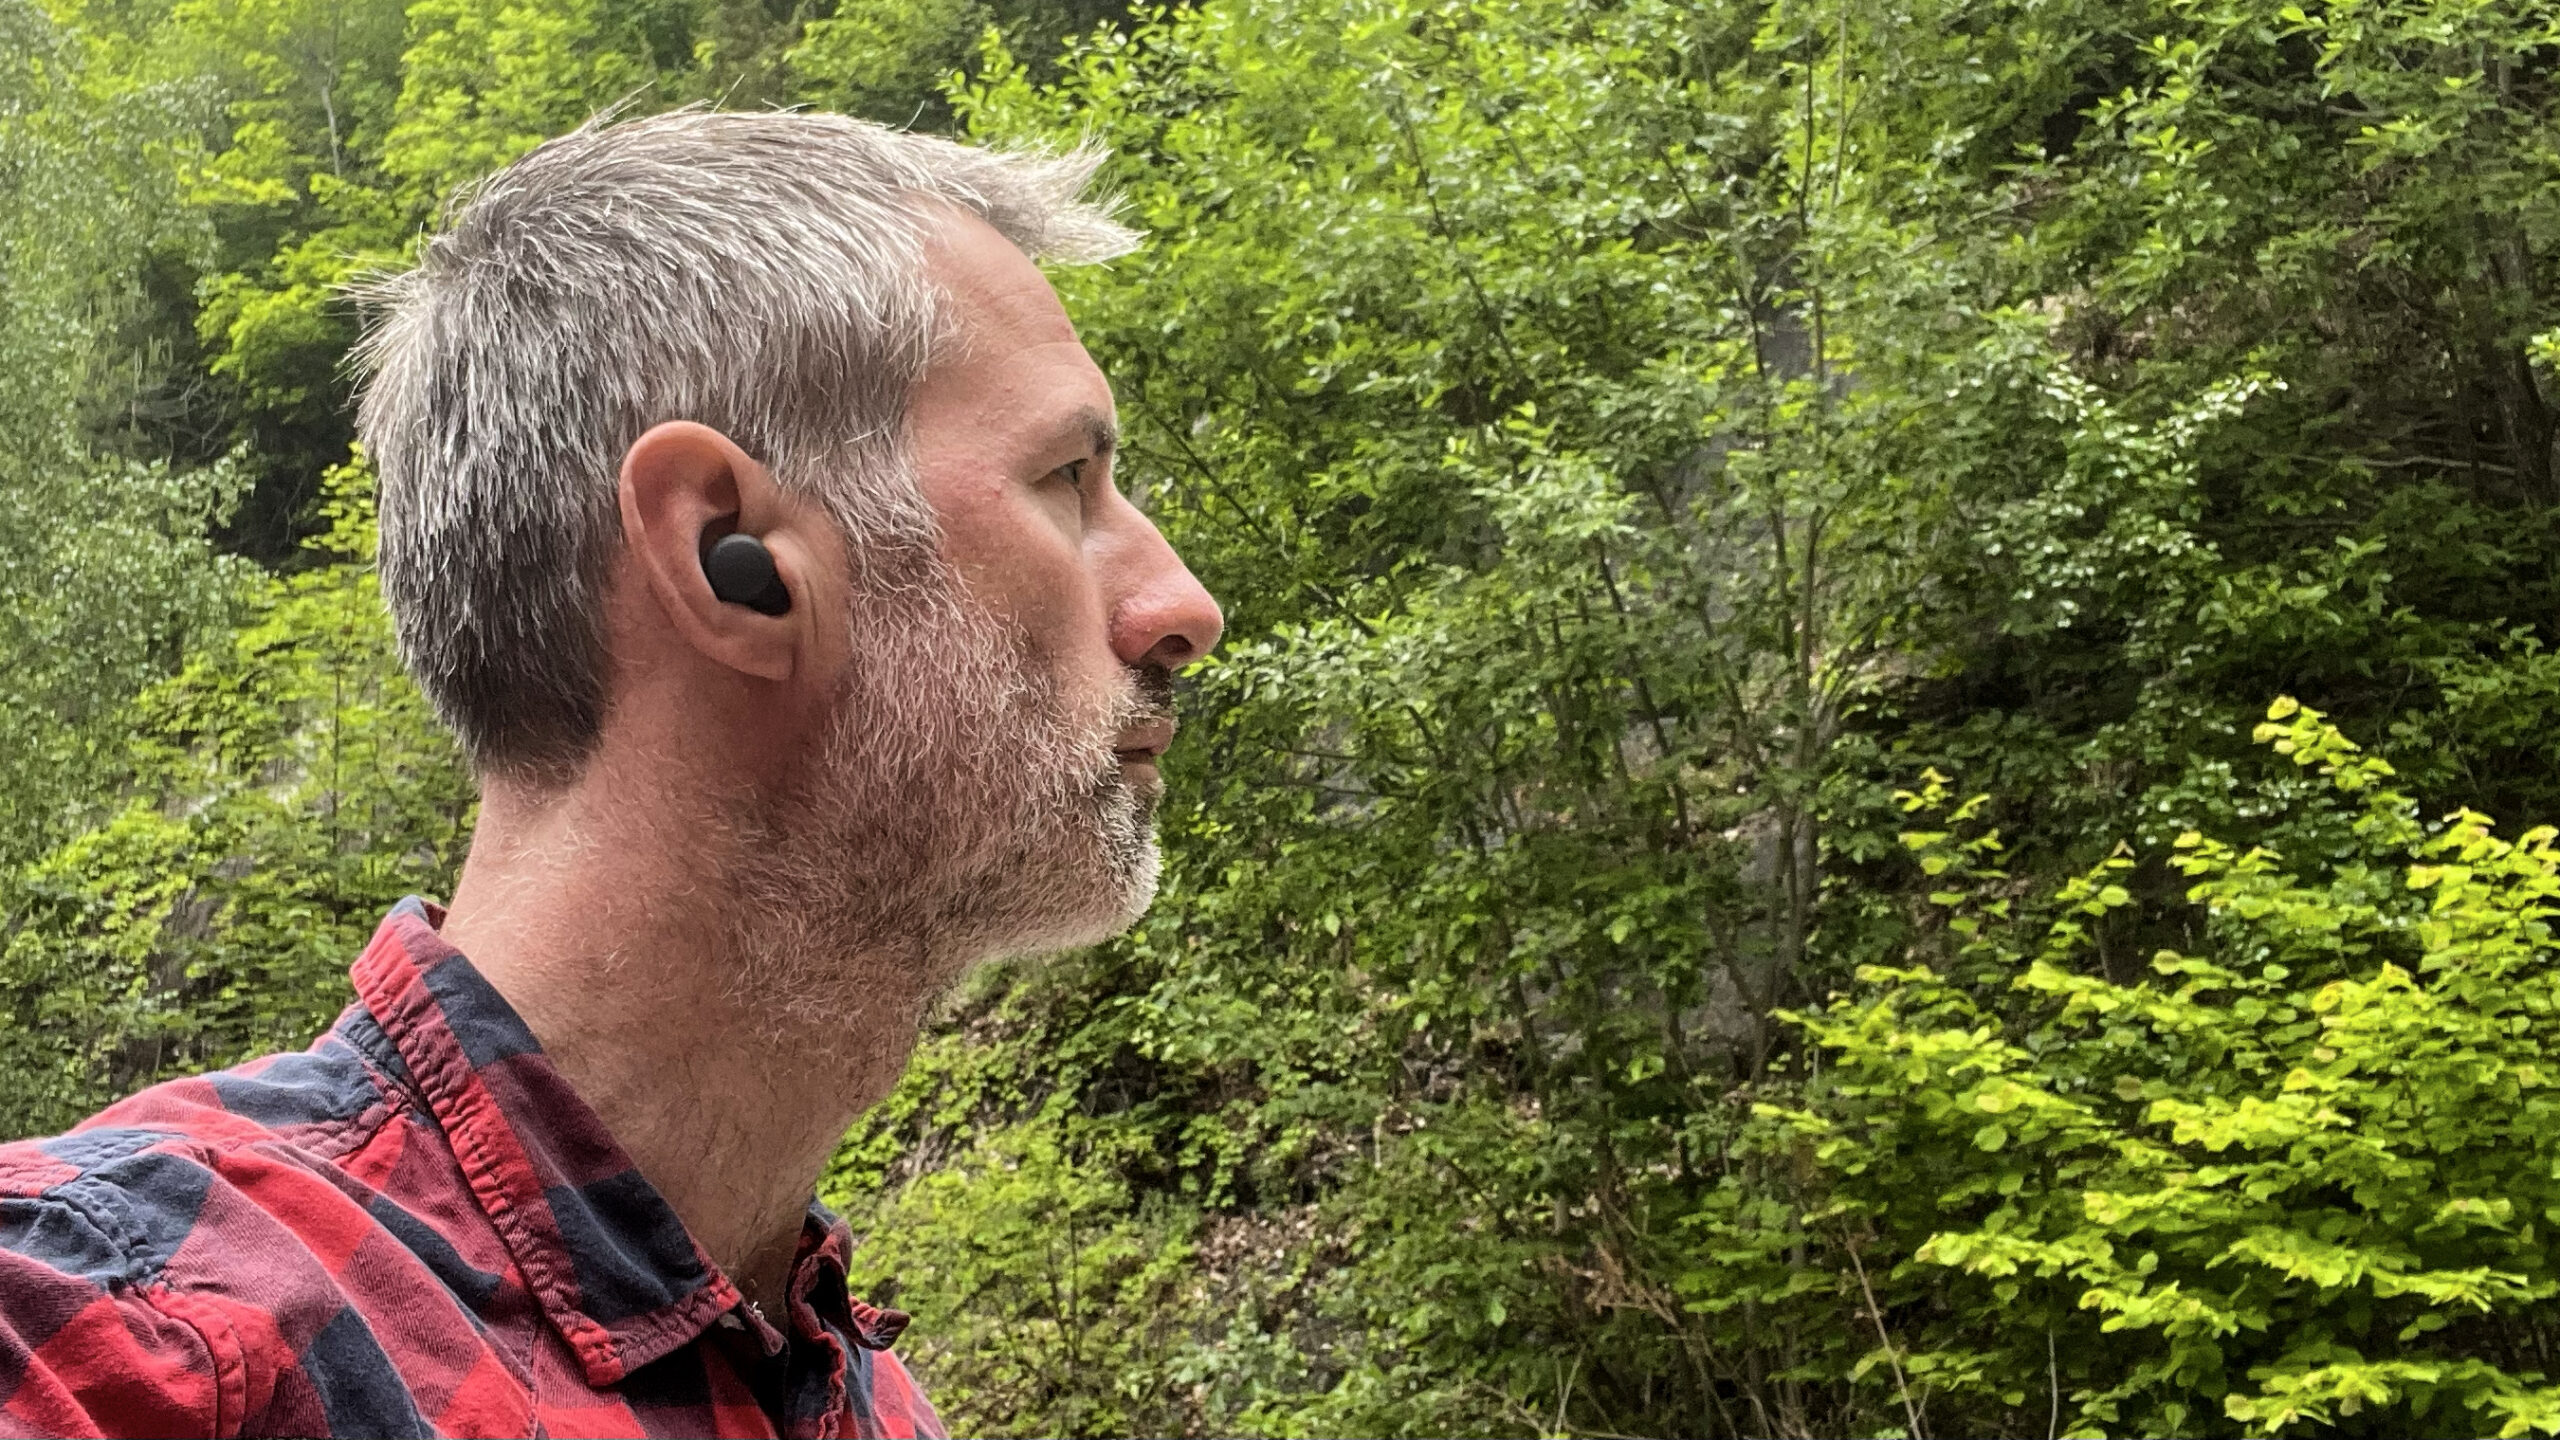 Sony LinkBuds in ear Geir Nordby